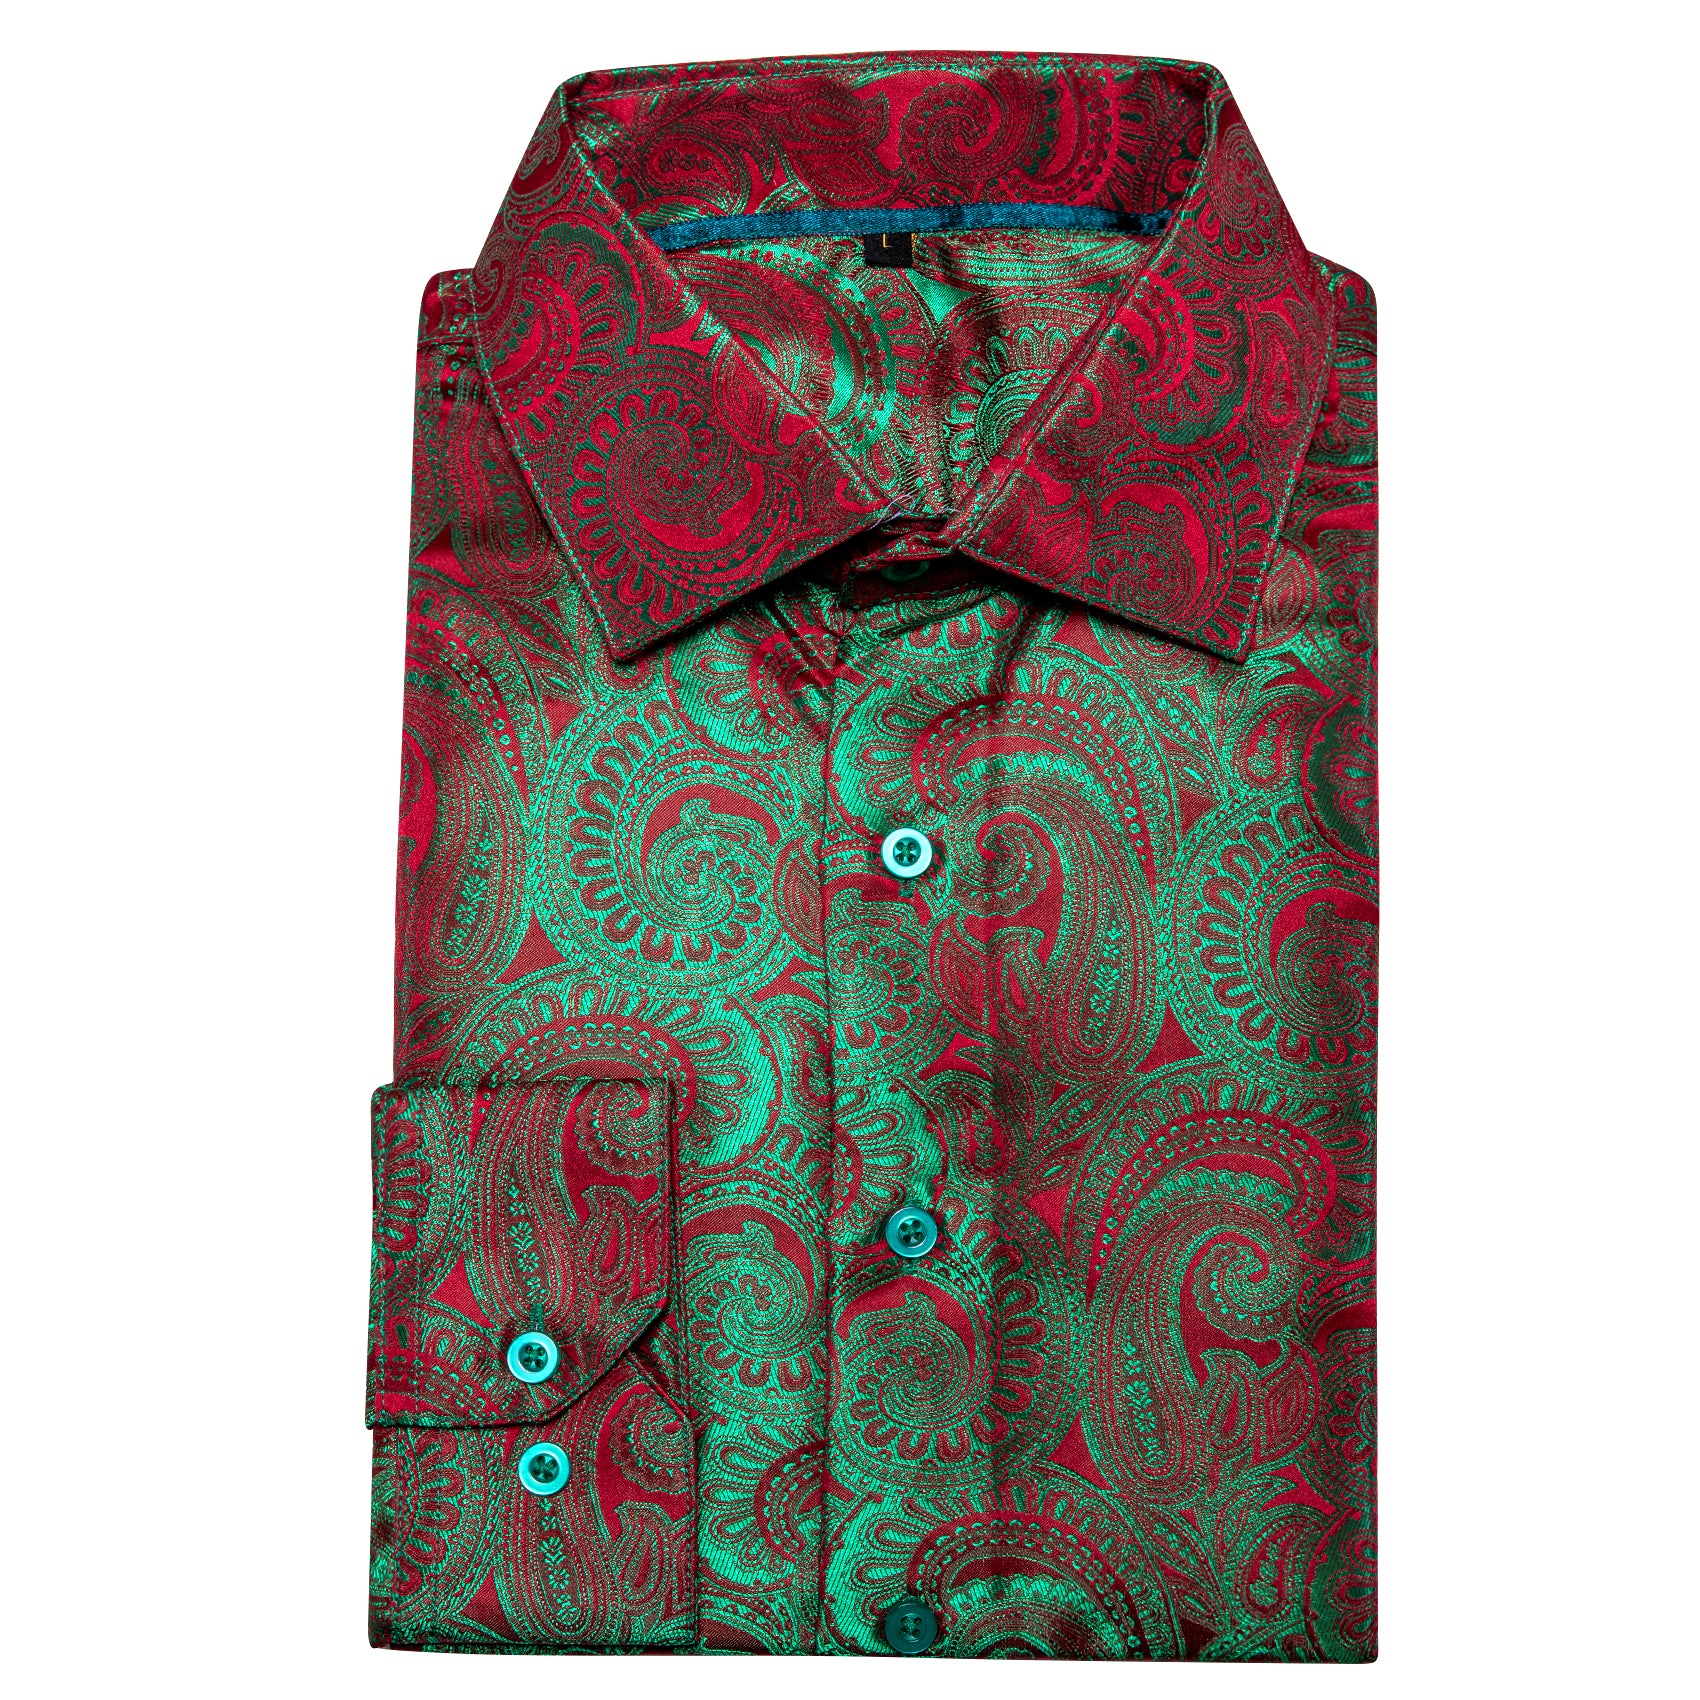 Barry.wang Button Down Shirt Green Red Silk Paisley Men's Shirt